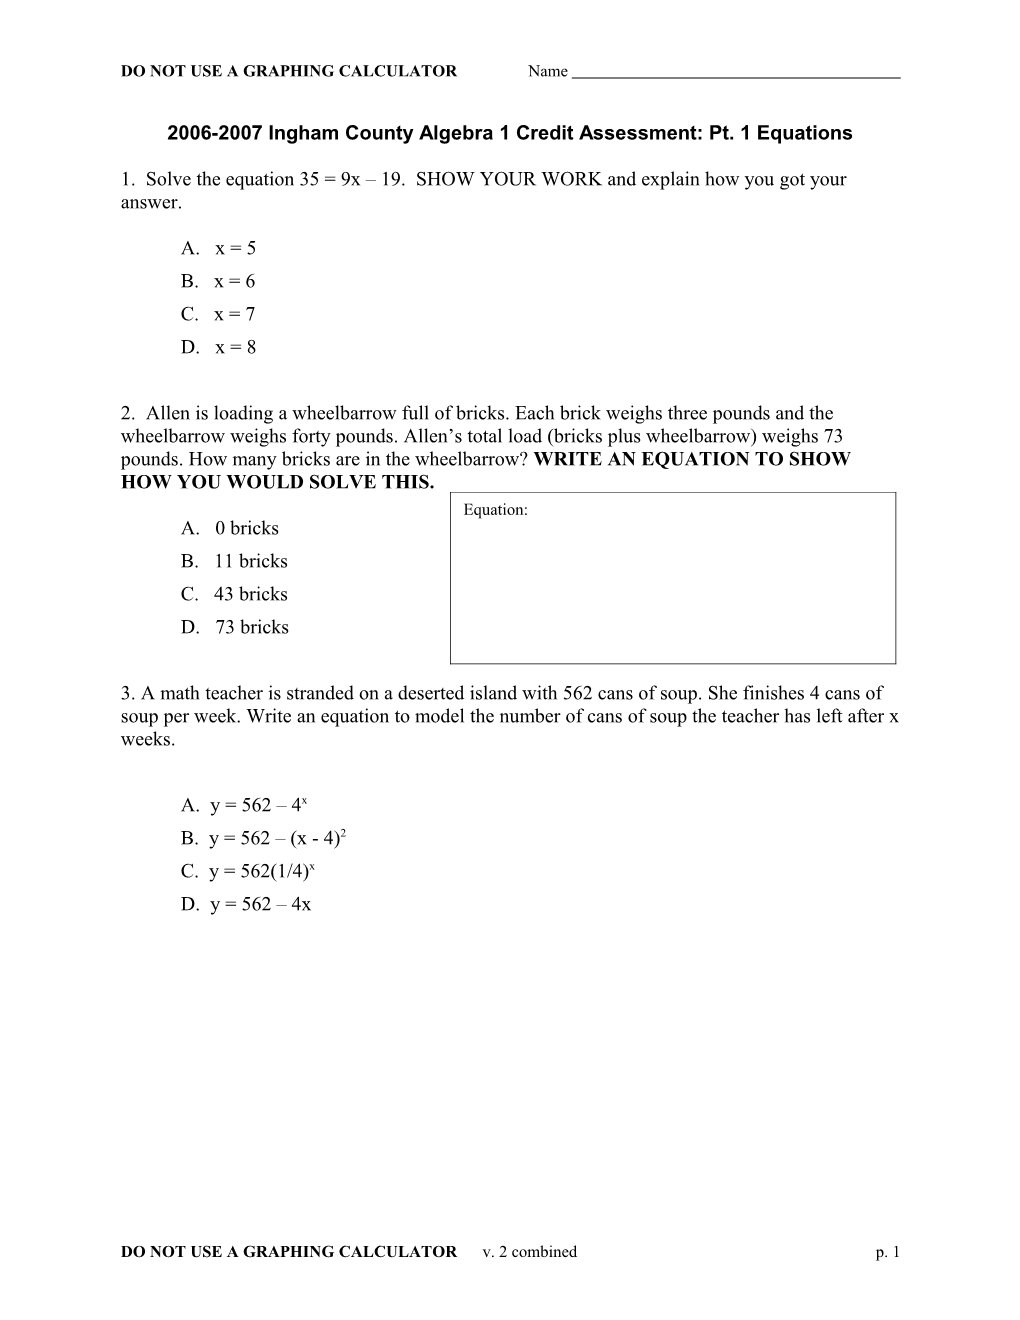 2006-2007 Ingham County Algebra 1 Credit Assessment:Pt. 1 Equations